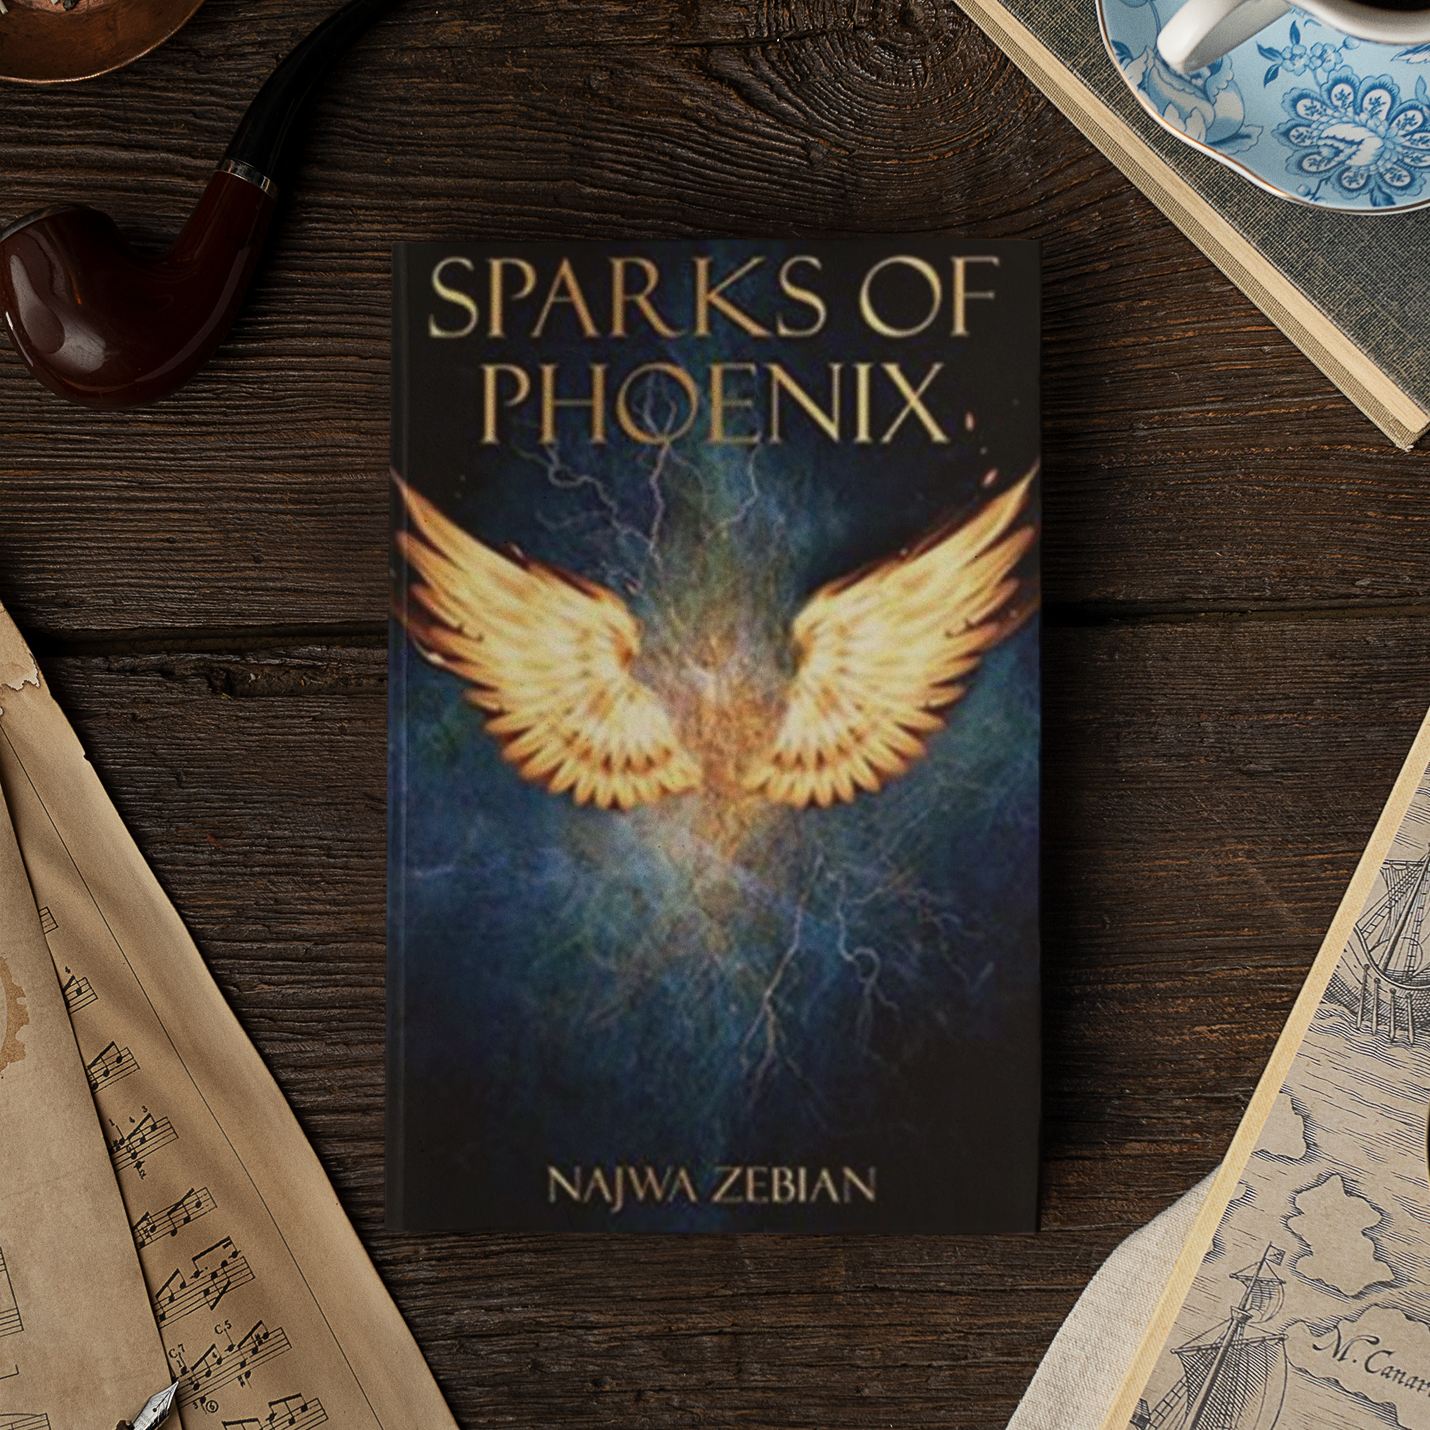 Sparks of Phoenix